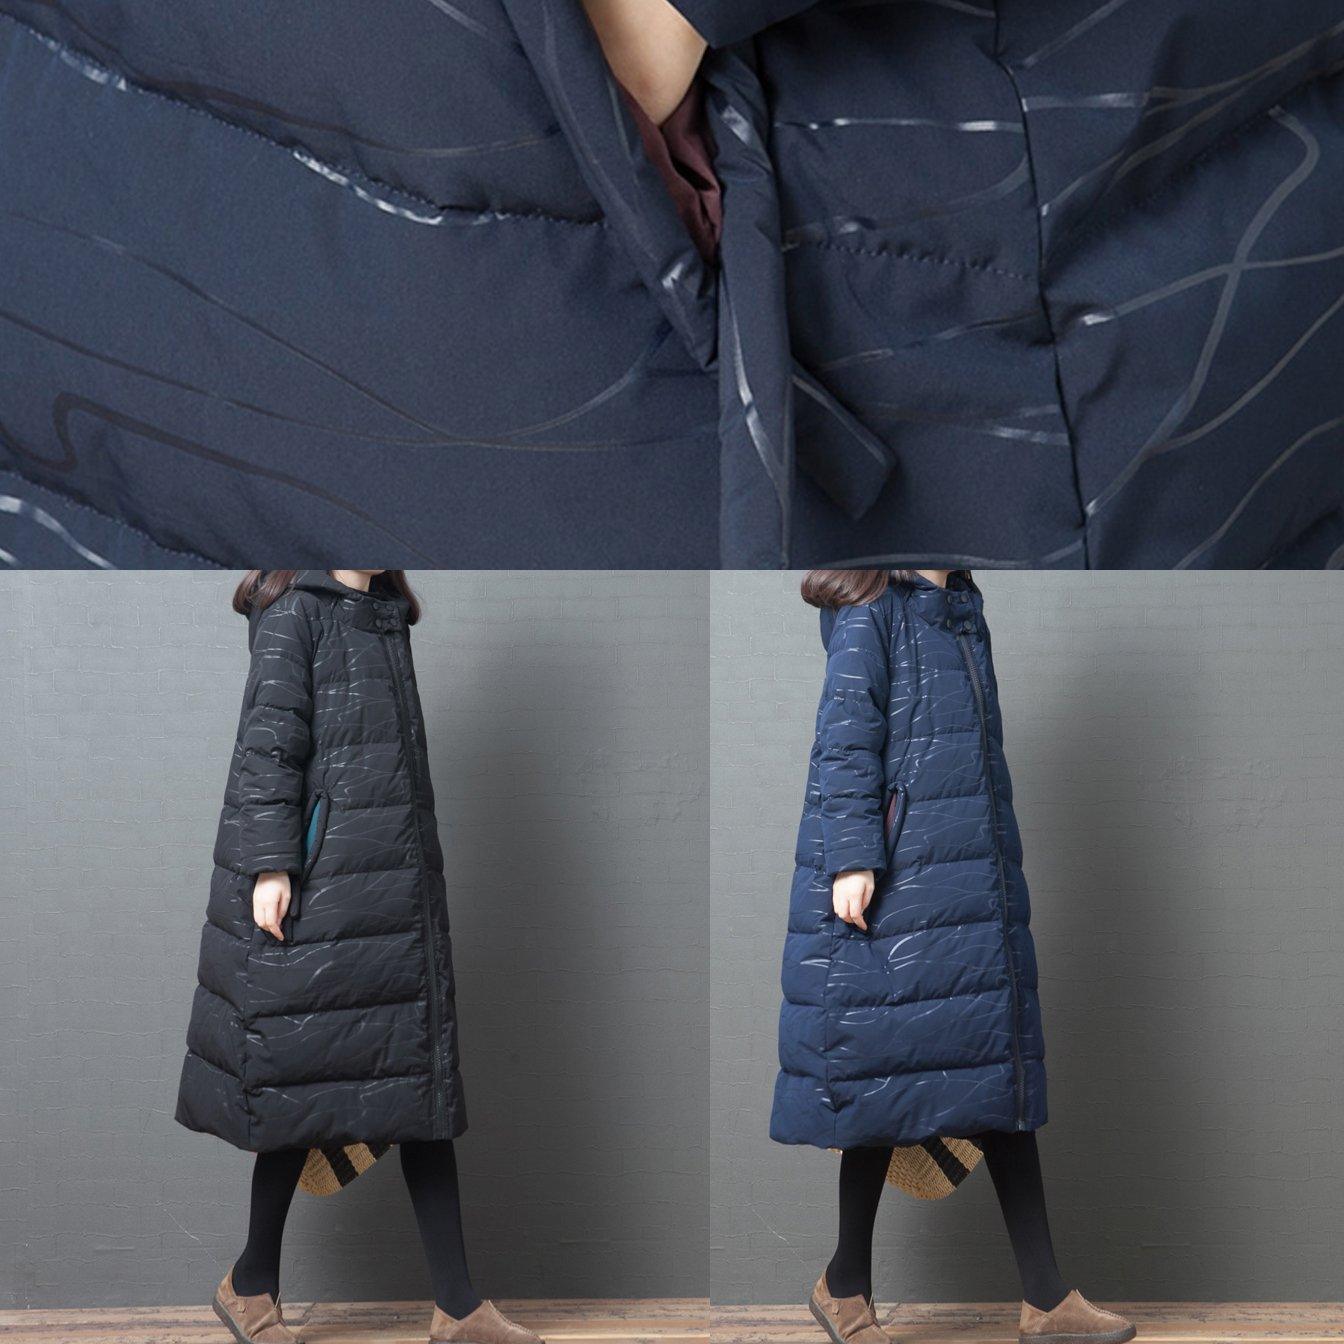 Luxury trendy plus size down jacket winter coats black hooded zippered women parka - Omychic